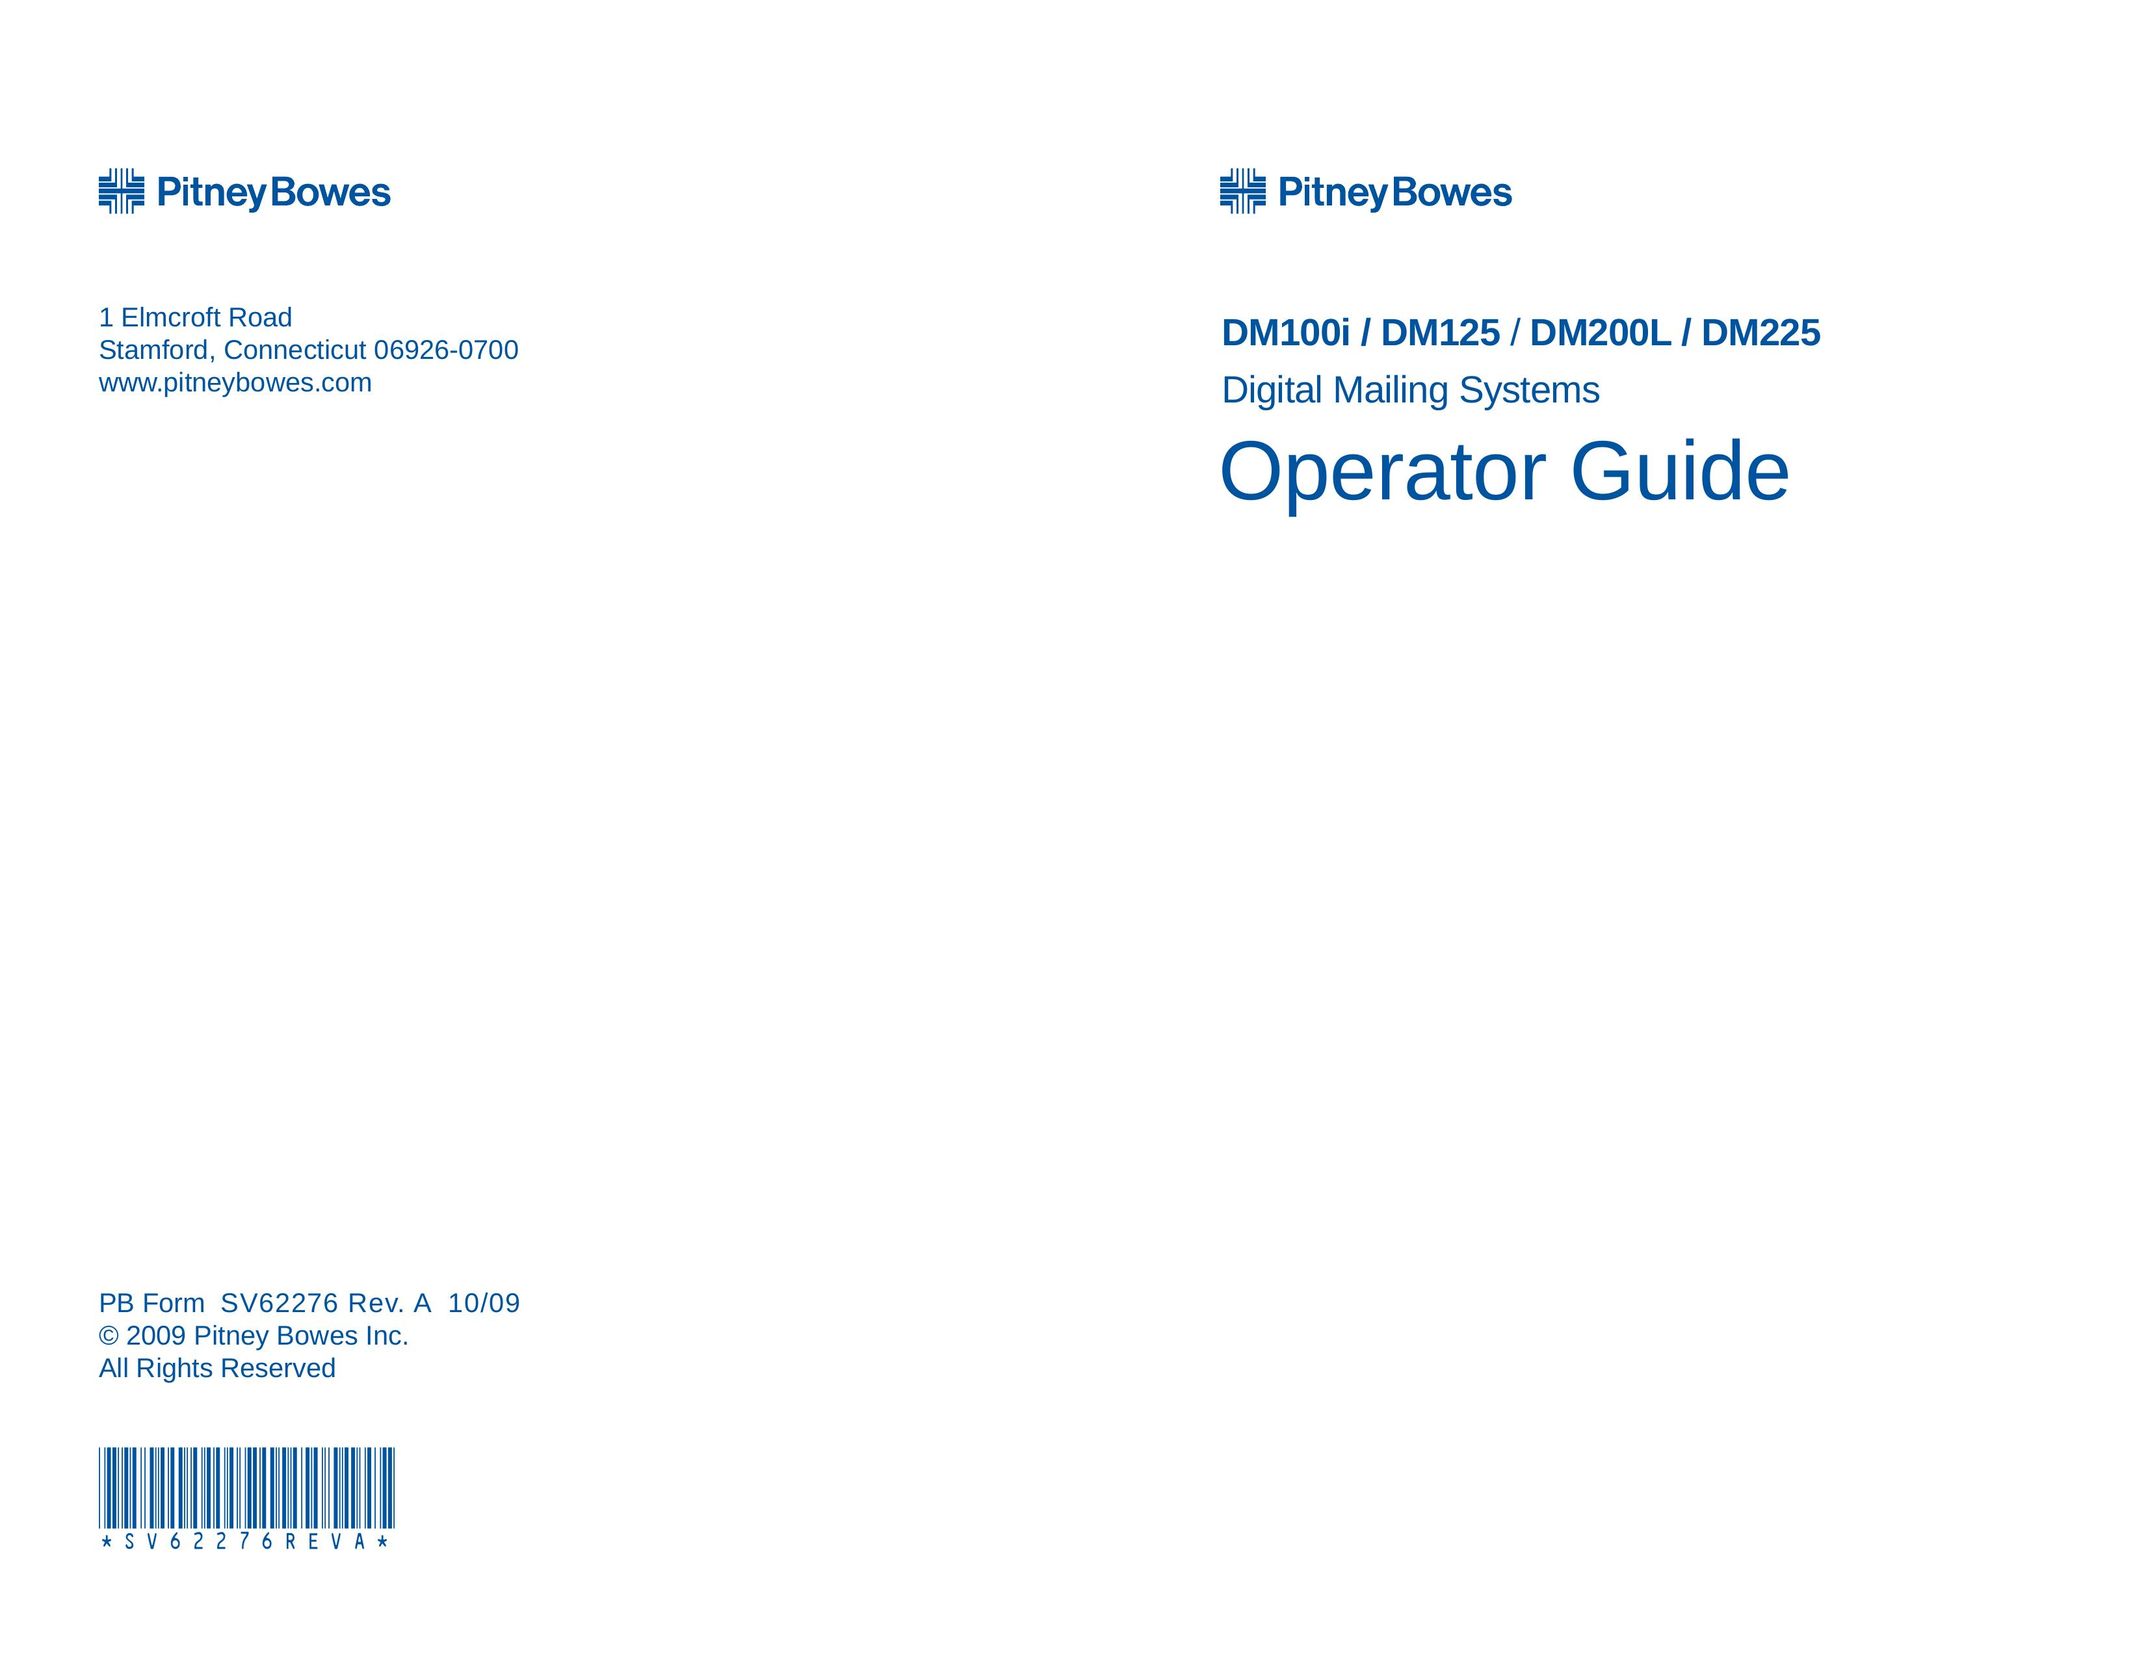 Pitney Bowes DM125 Postal Equipment User Manual